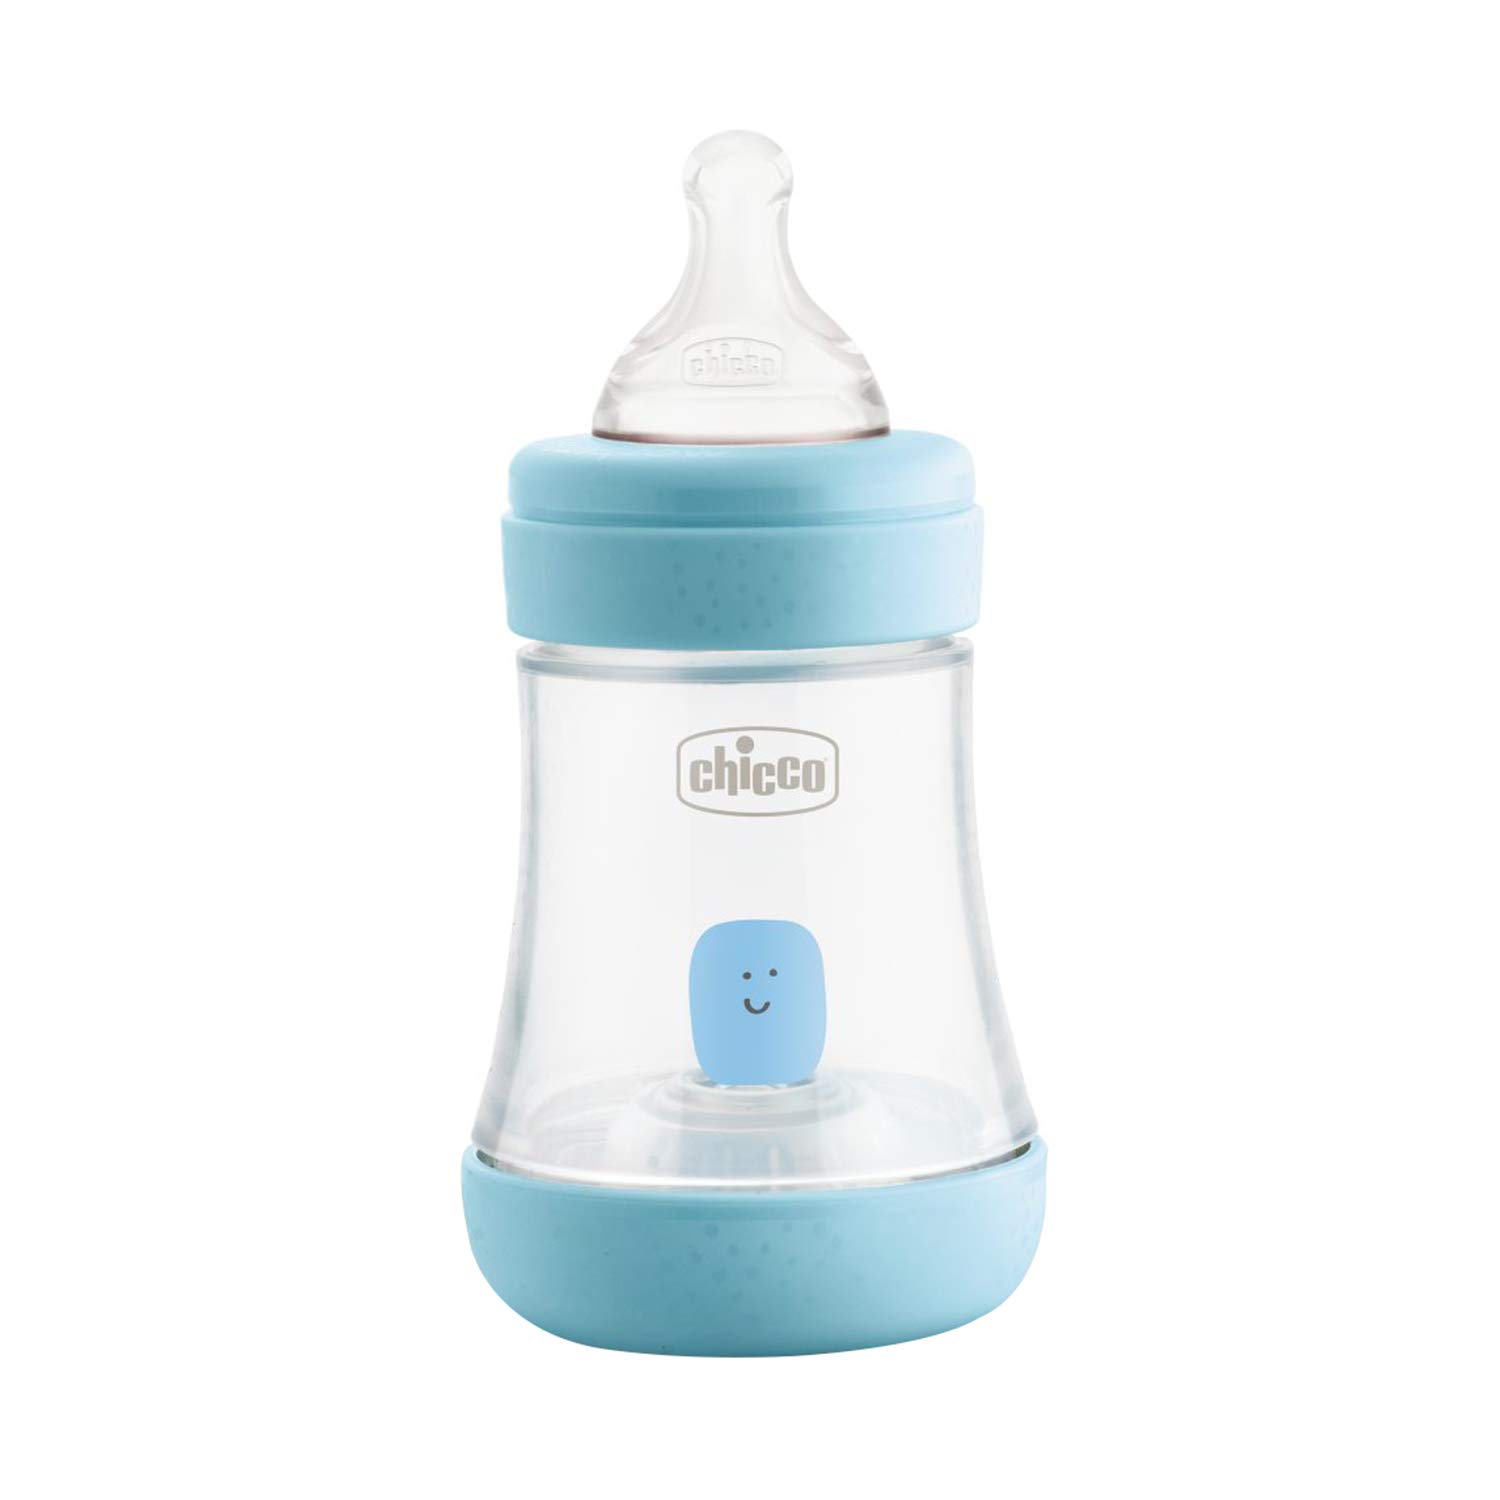 Chicco Perfect 5 150ml Biofunctional Feeding Bottle, Advanced Anti-Colic System, BPA Free, Hygienic Silicone Teat (Blue)